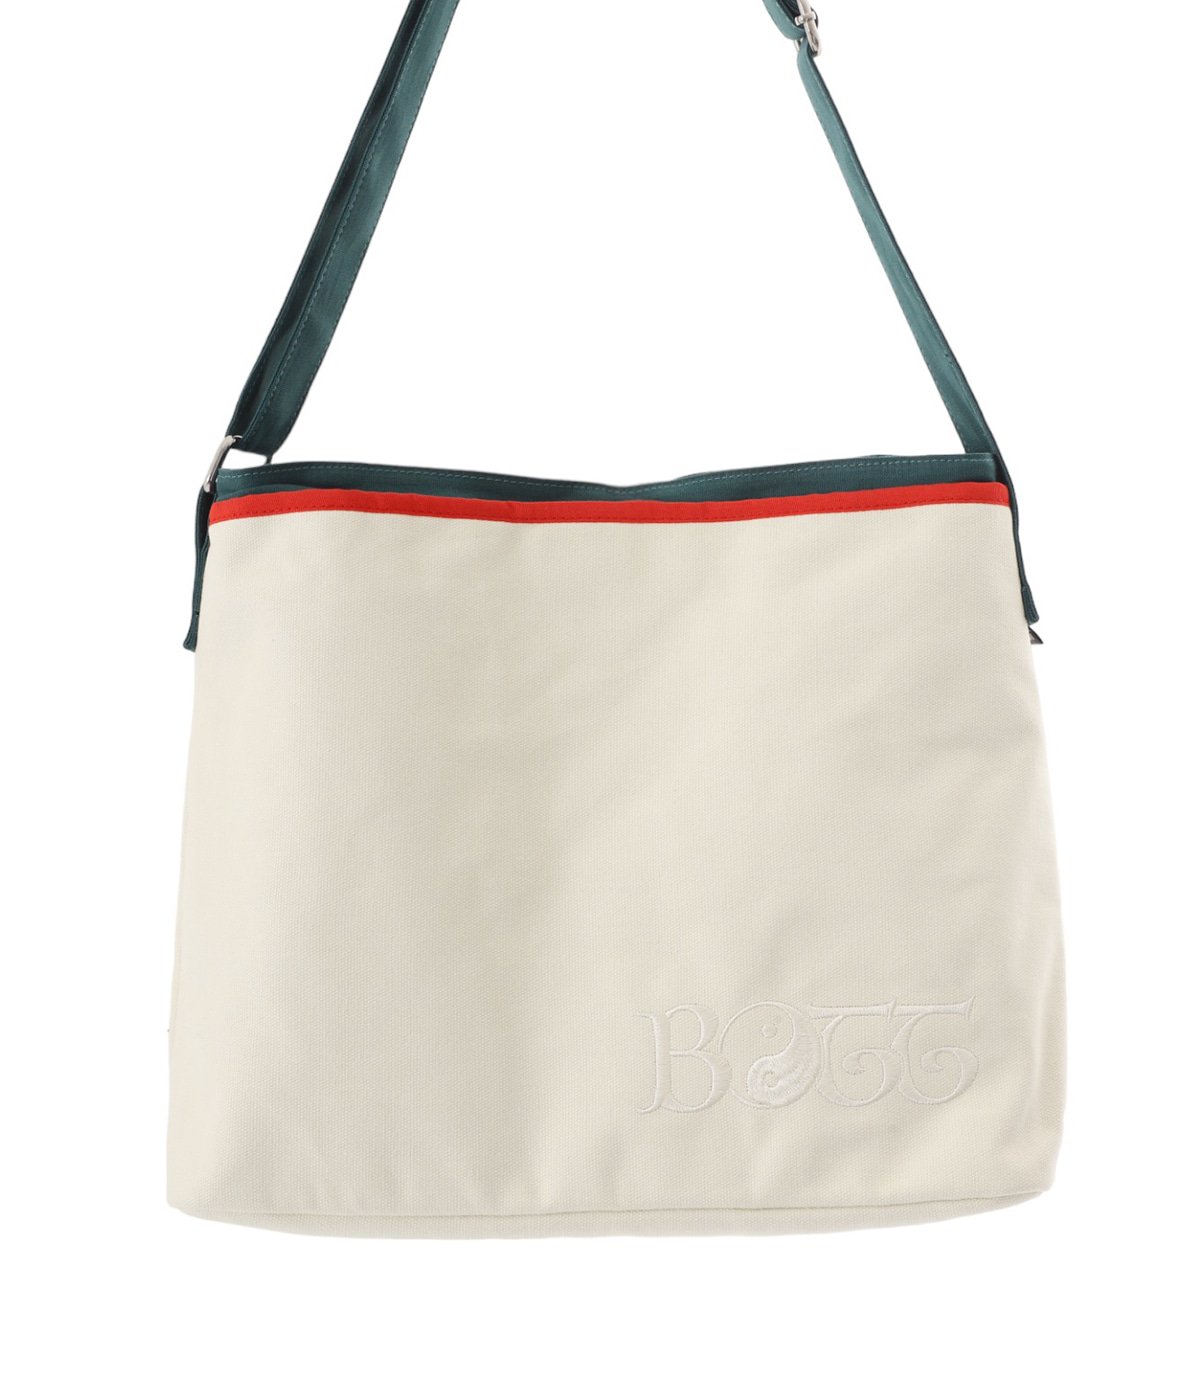 Canvas Shoulder Bag | BOTT(ボット) / バッグ ショルダーバッグ